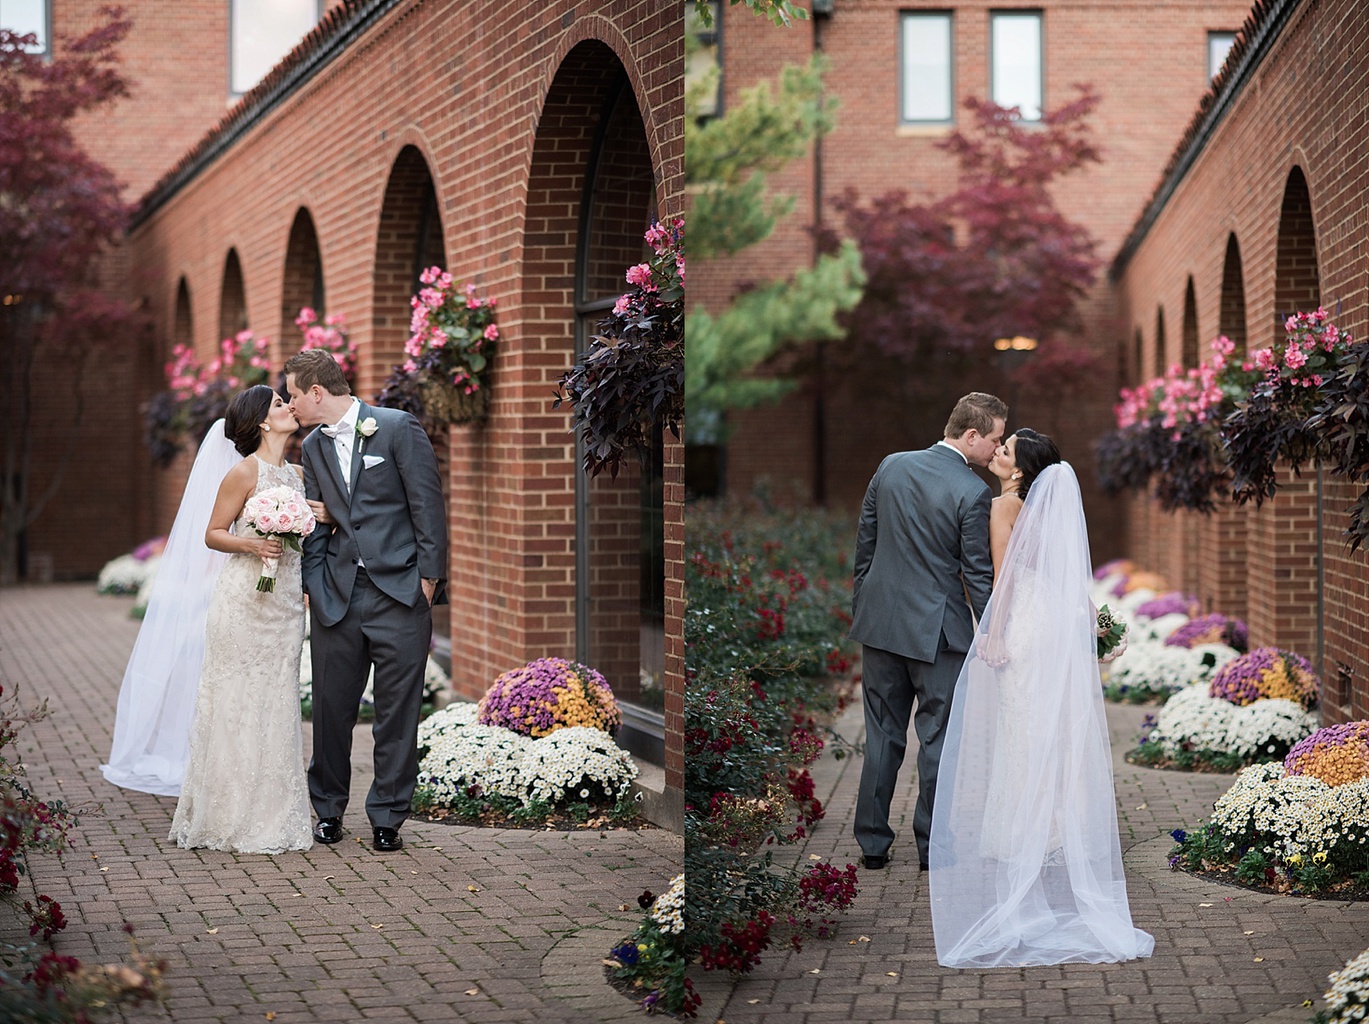 Detroit Wedding venues: The Inn St. John's, Plymouth courtyard wedding photos